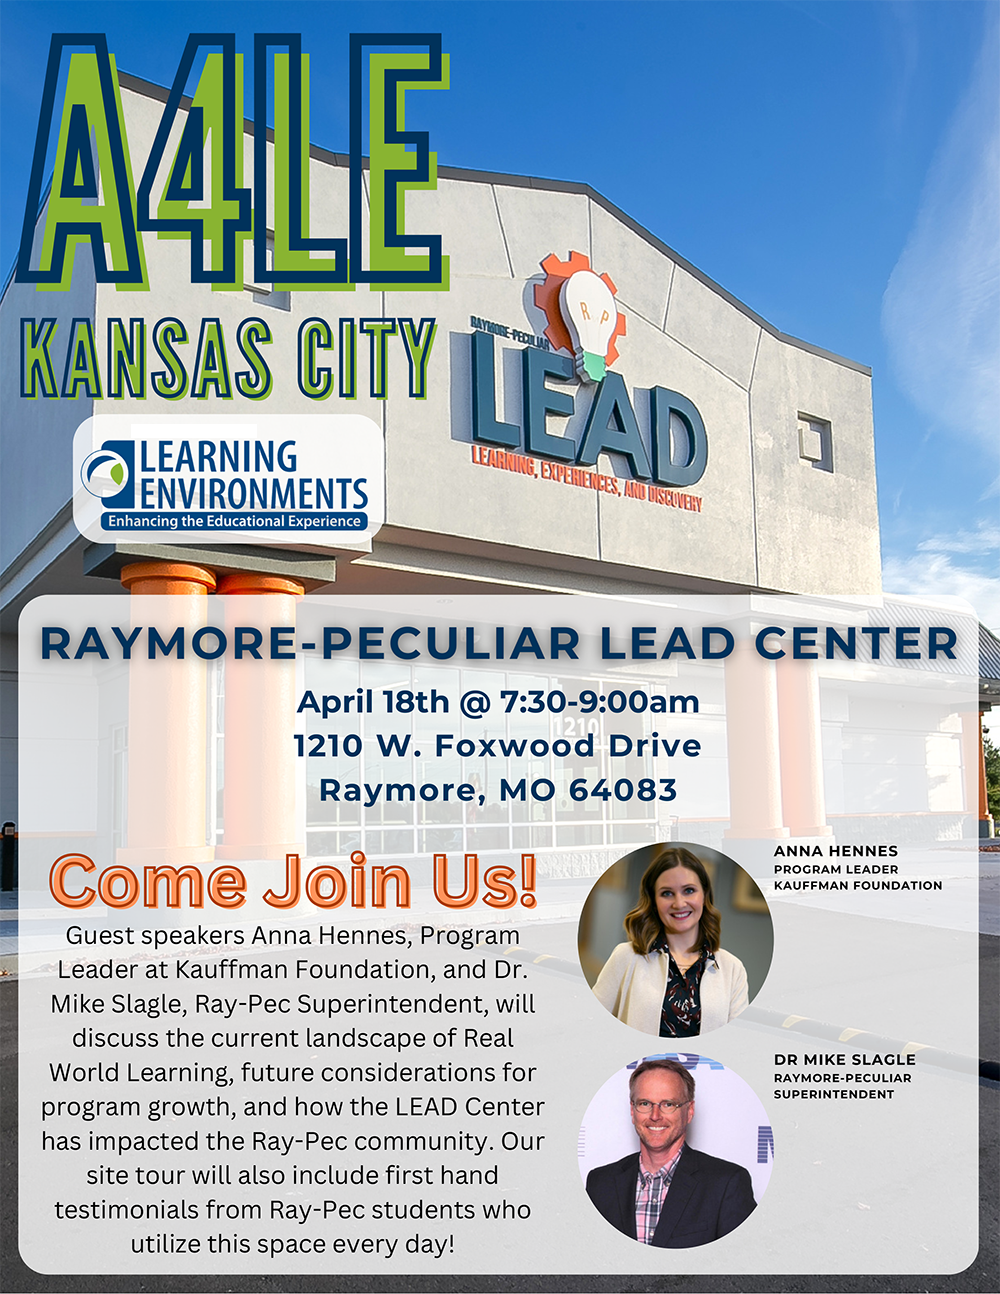 Raymore-Peculiar Lead Center